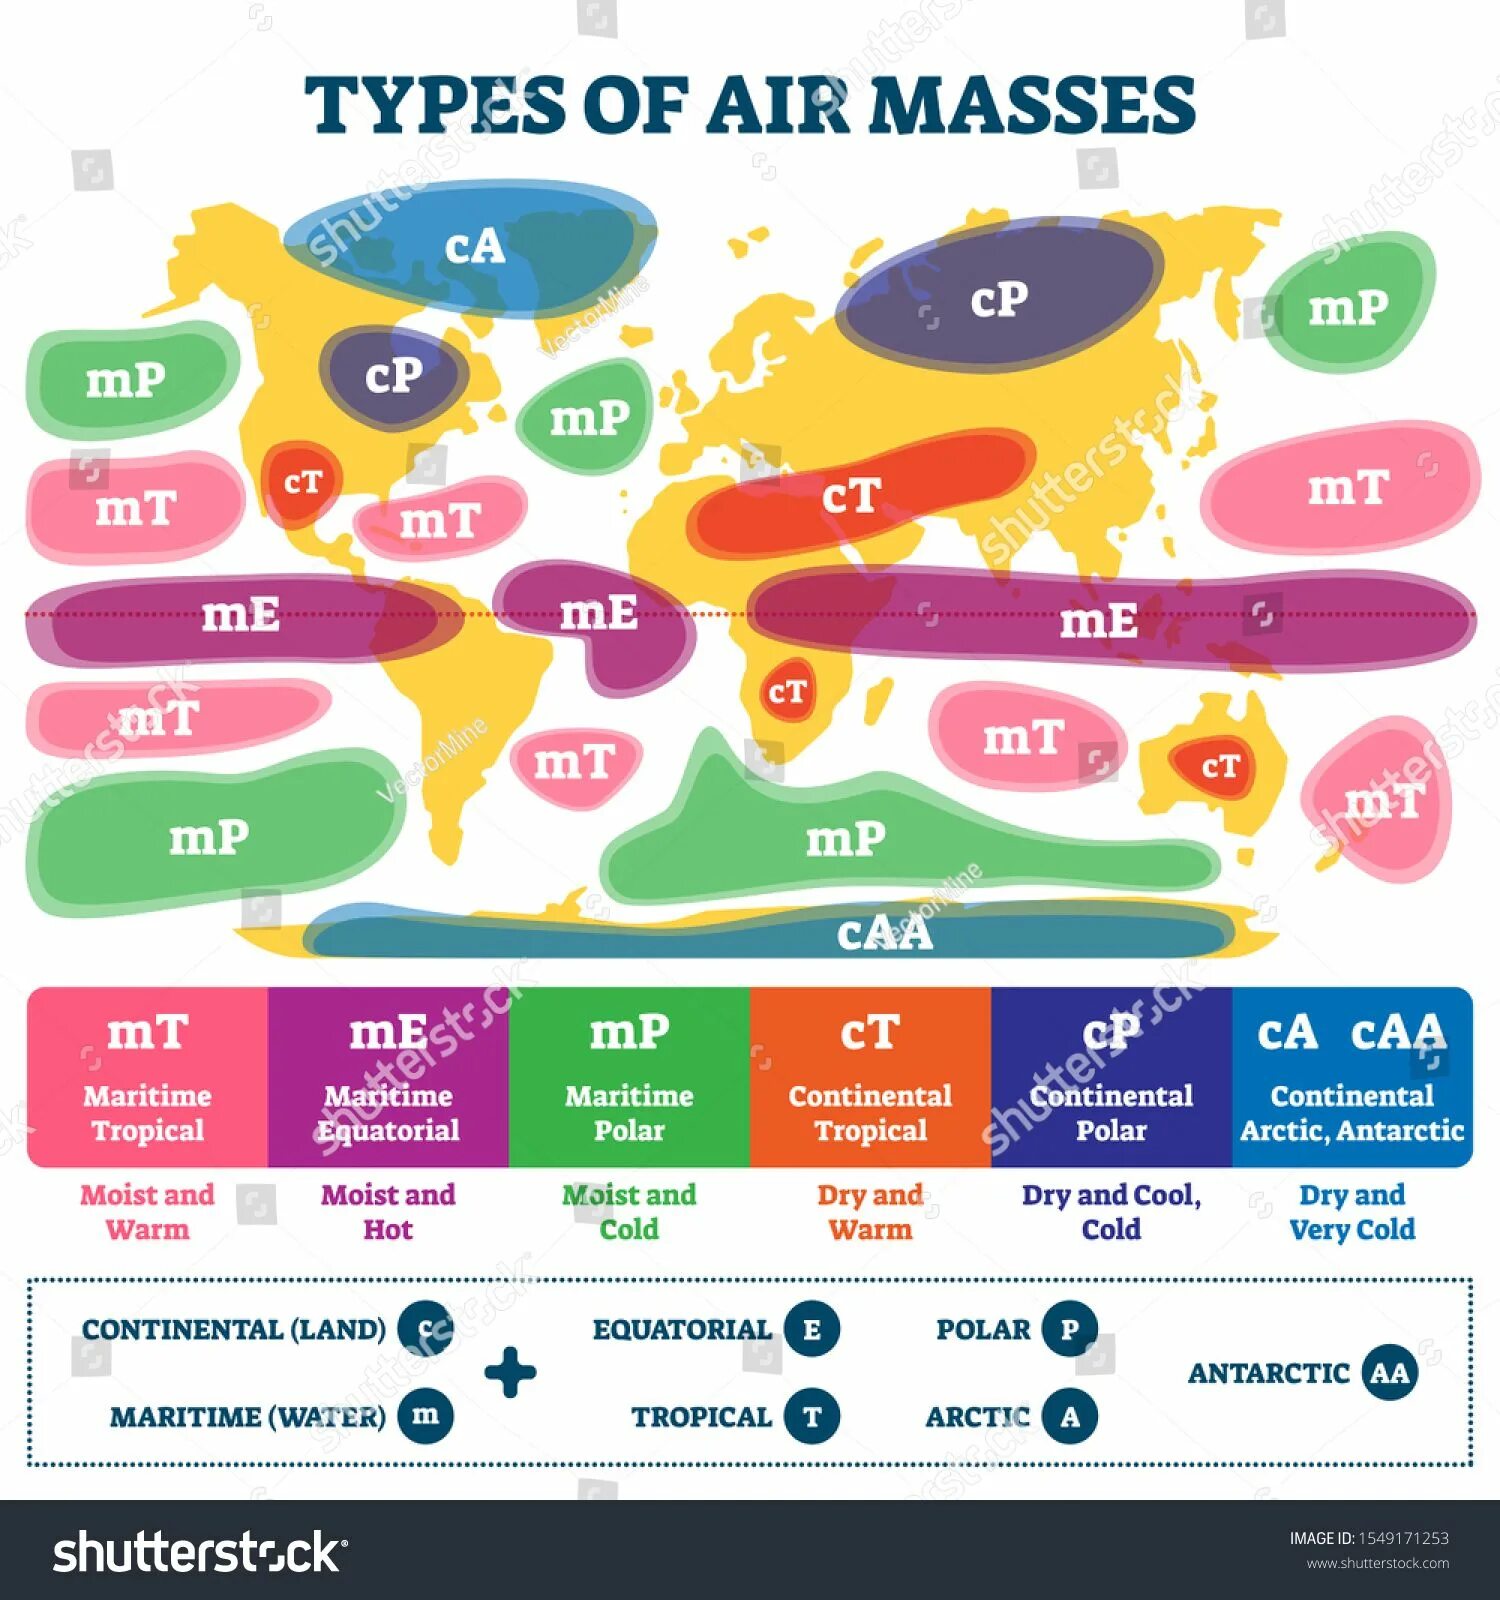 Types of Air masses. Equatorial Air masses. Air Type. Map scheme.